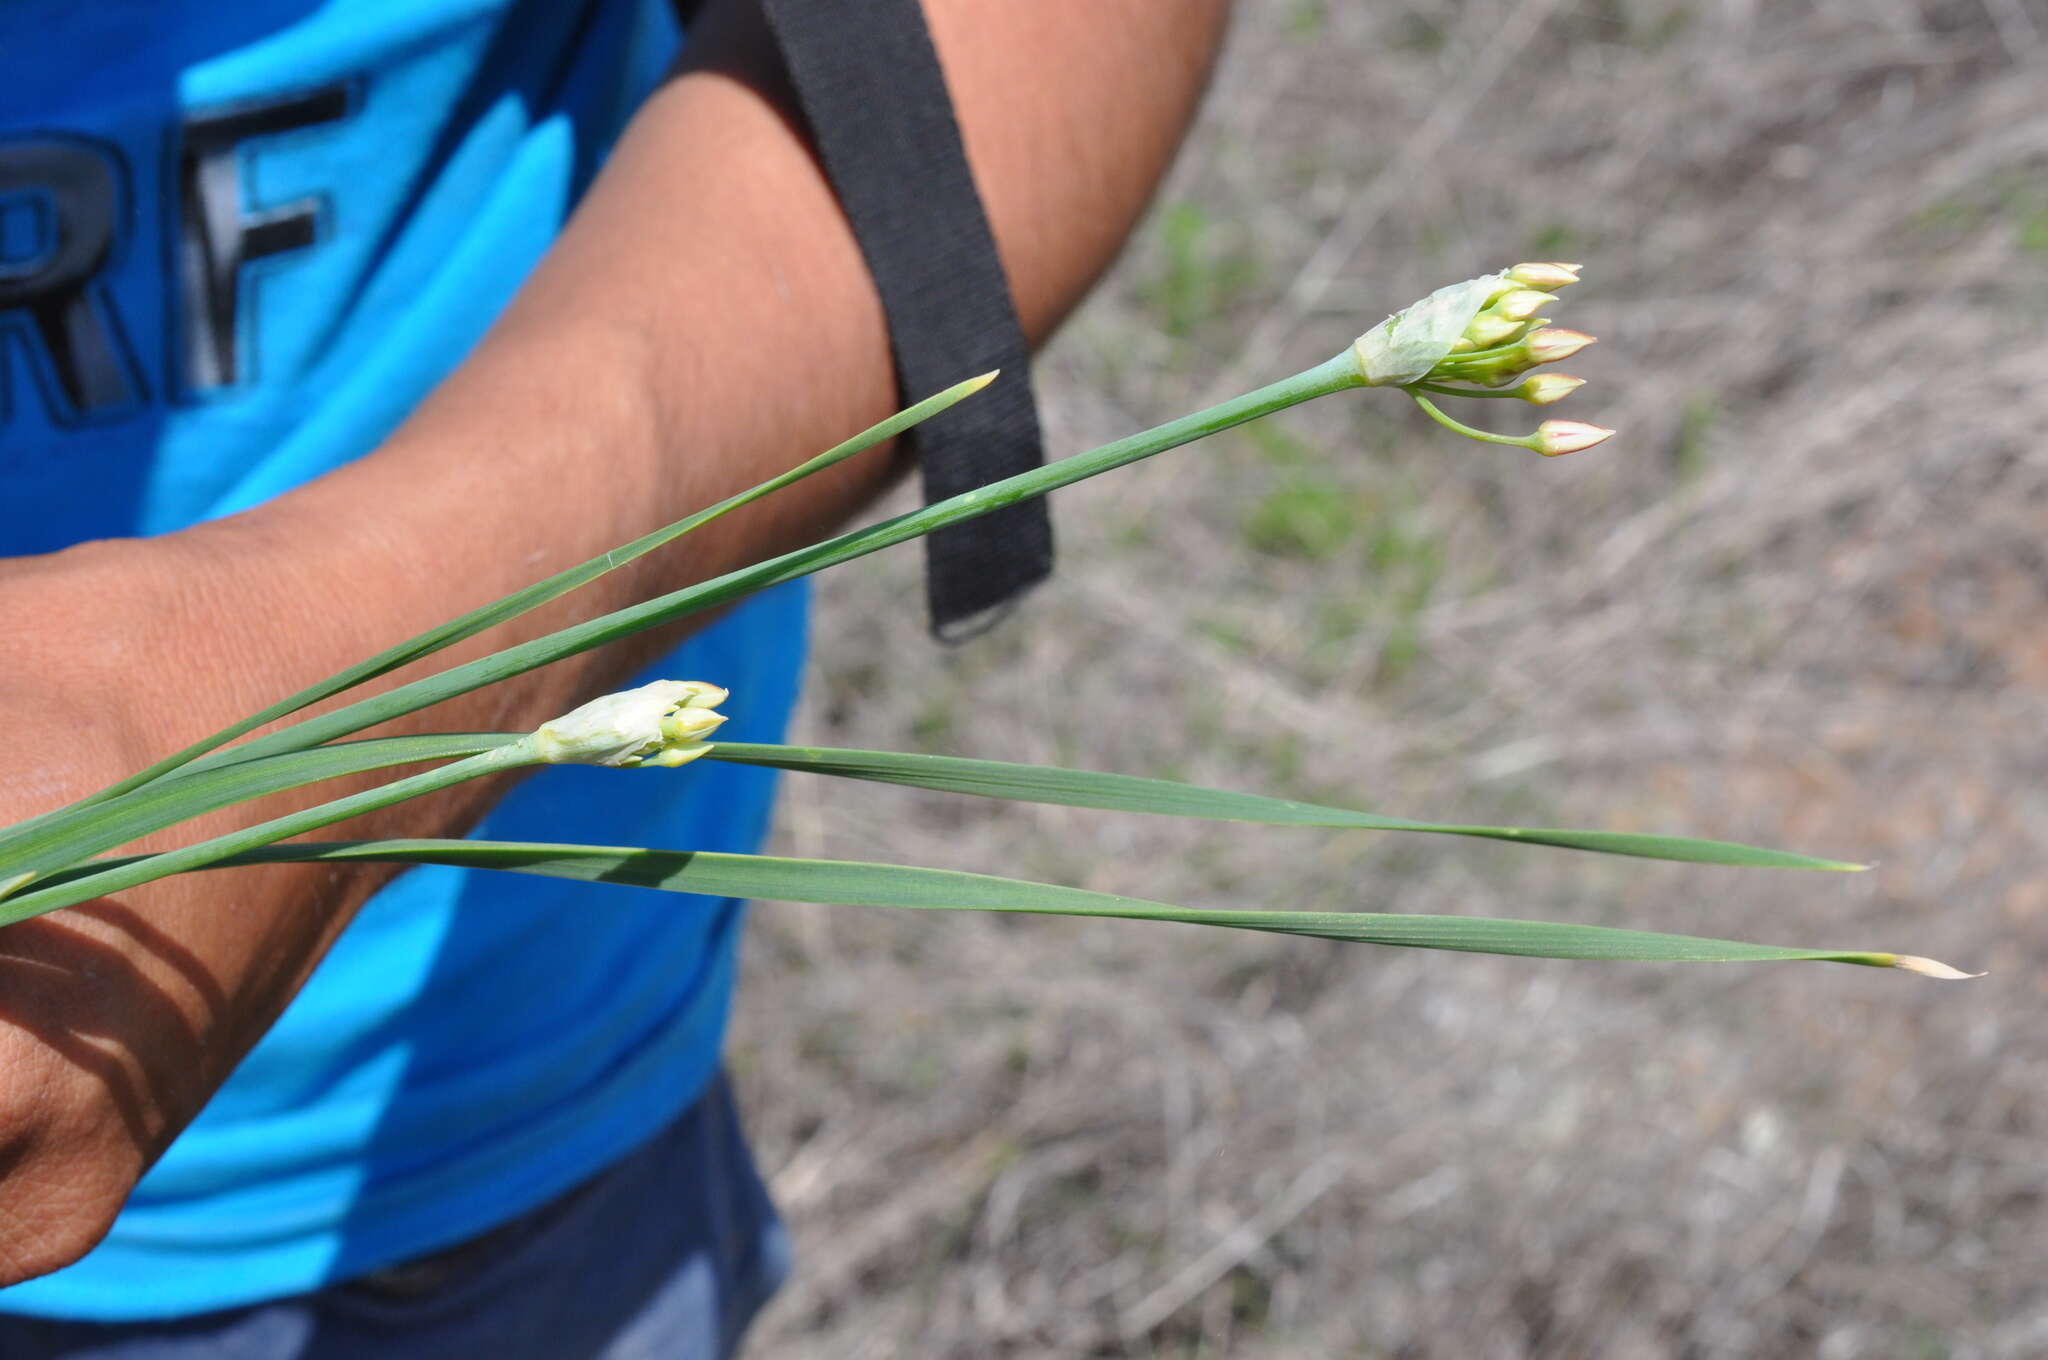 Image of slender false garlic